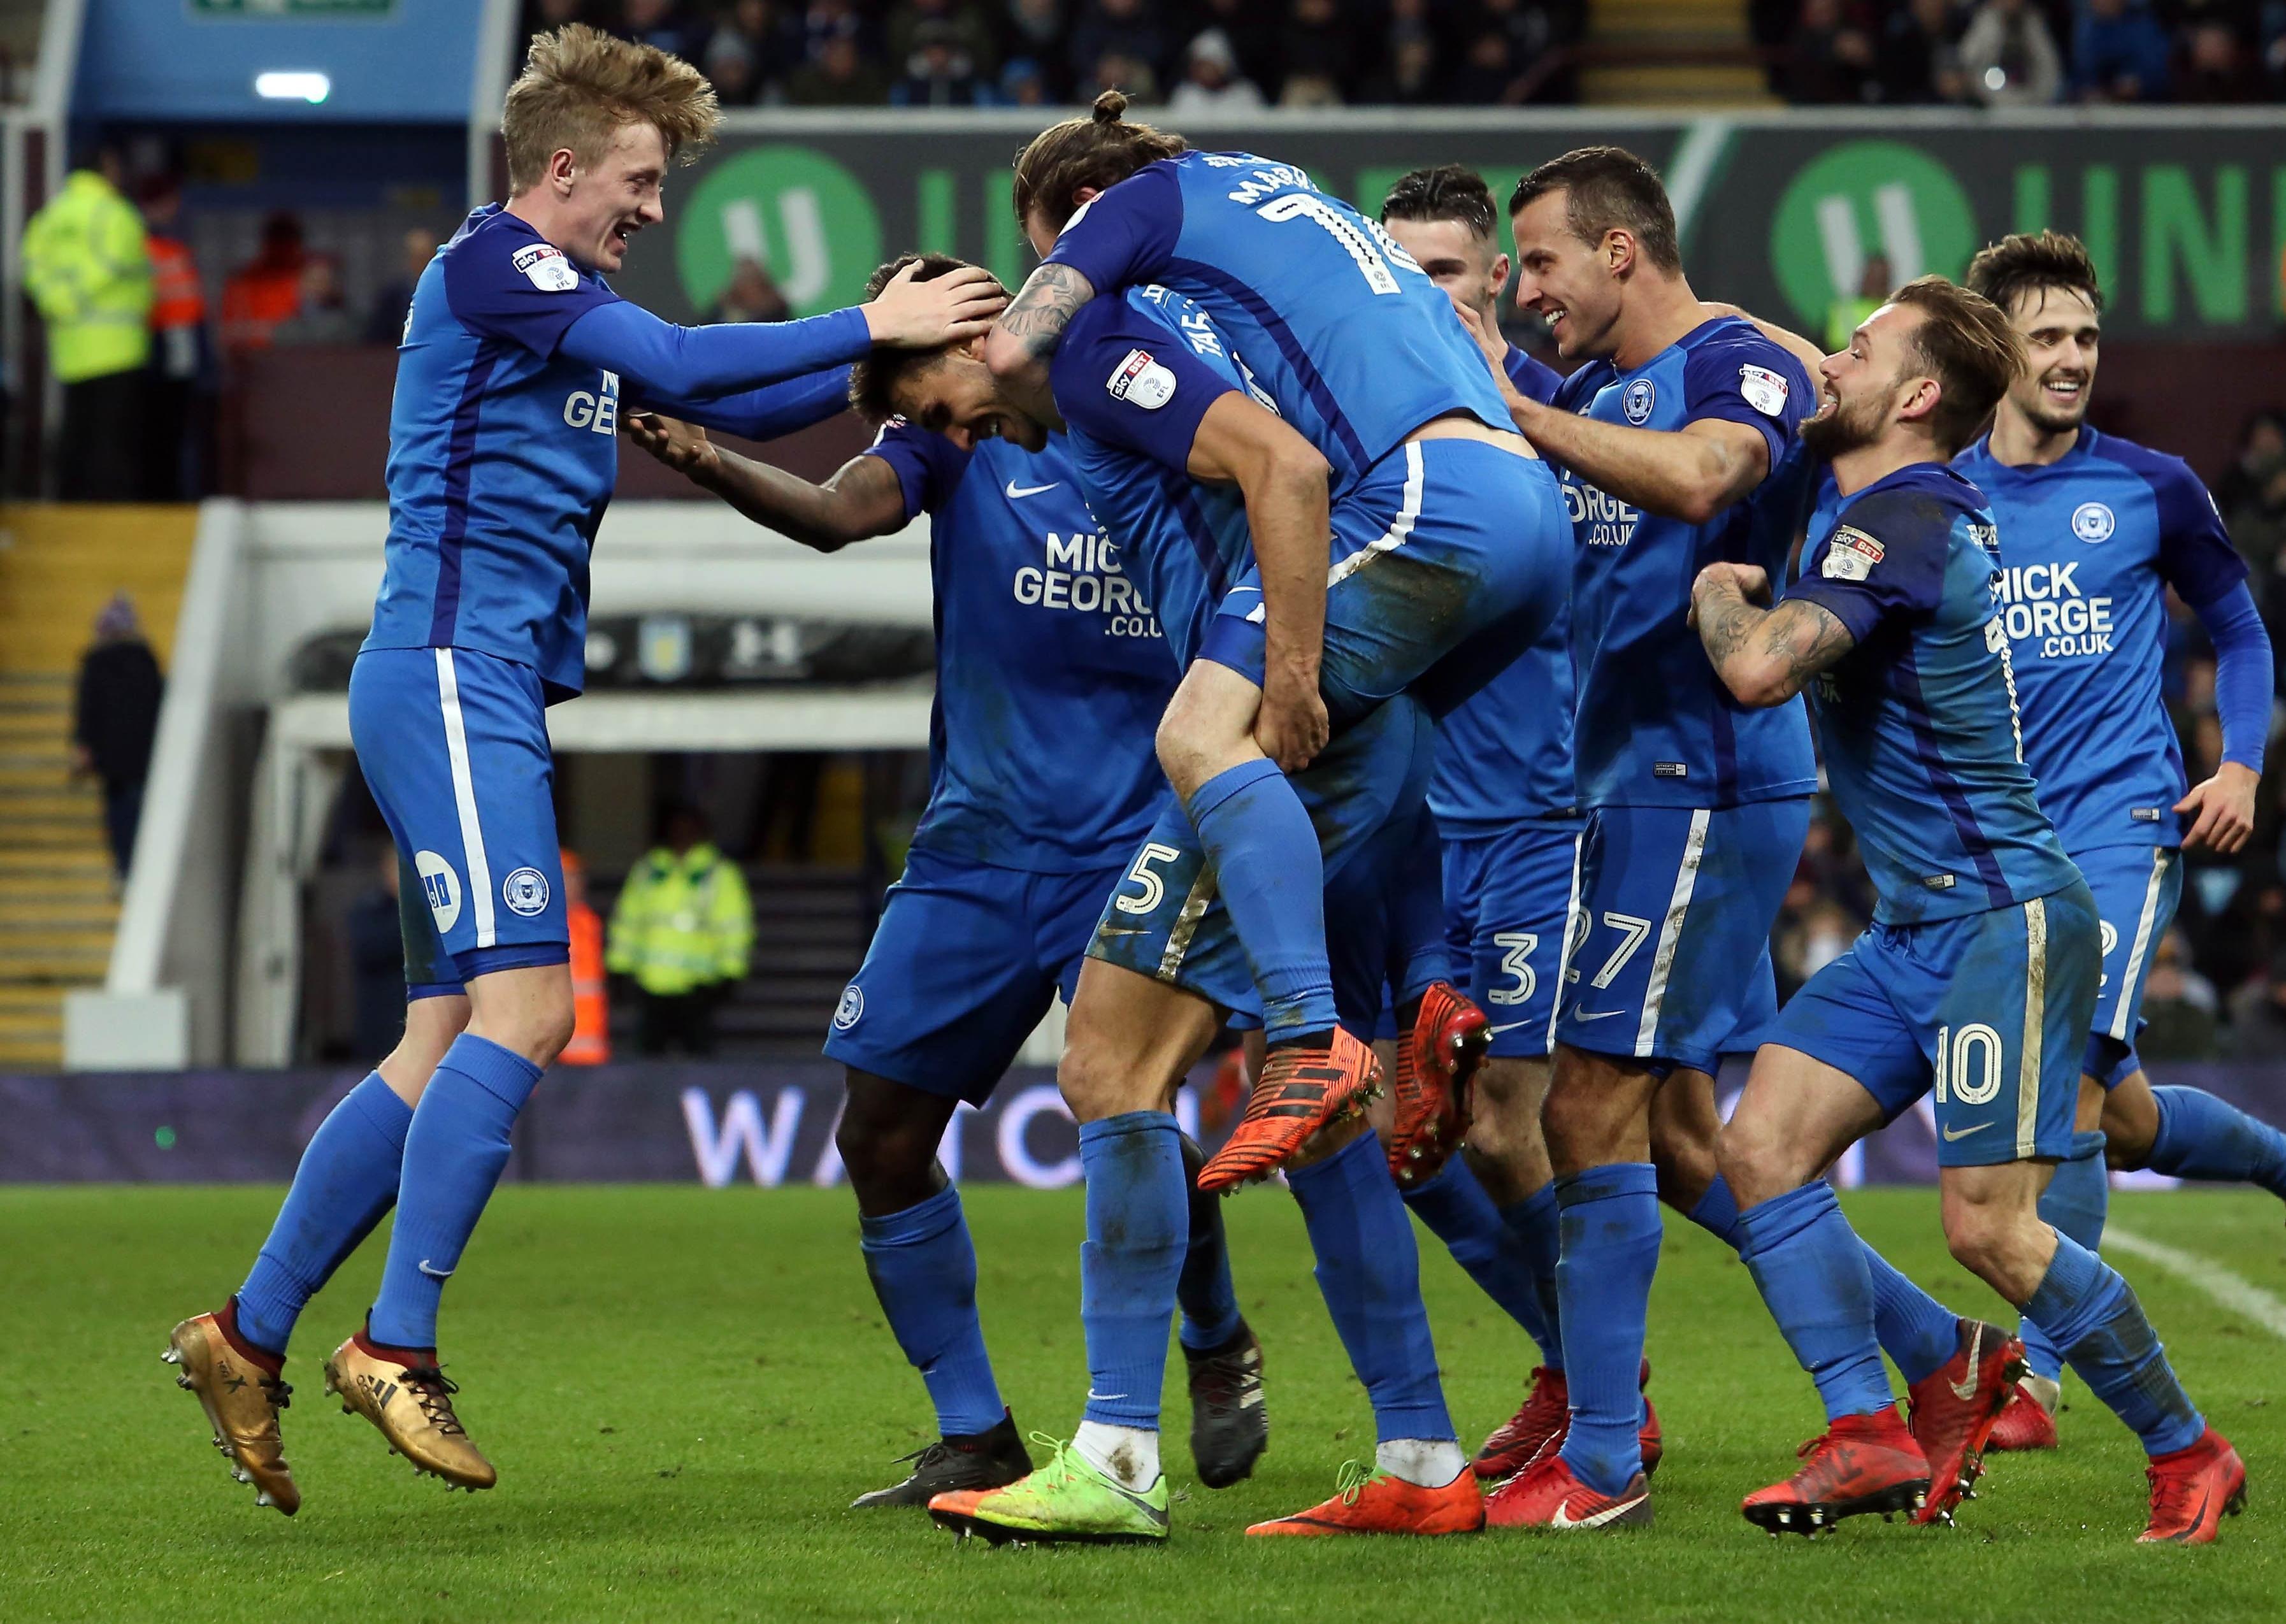 Posh players celebrate a goal against Aston Villa in 2018.